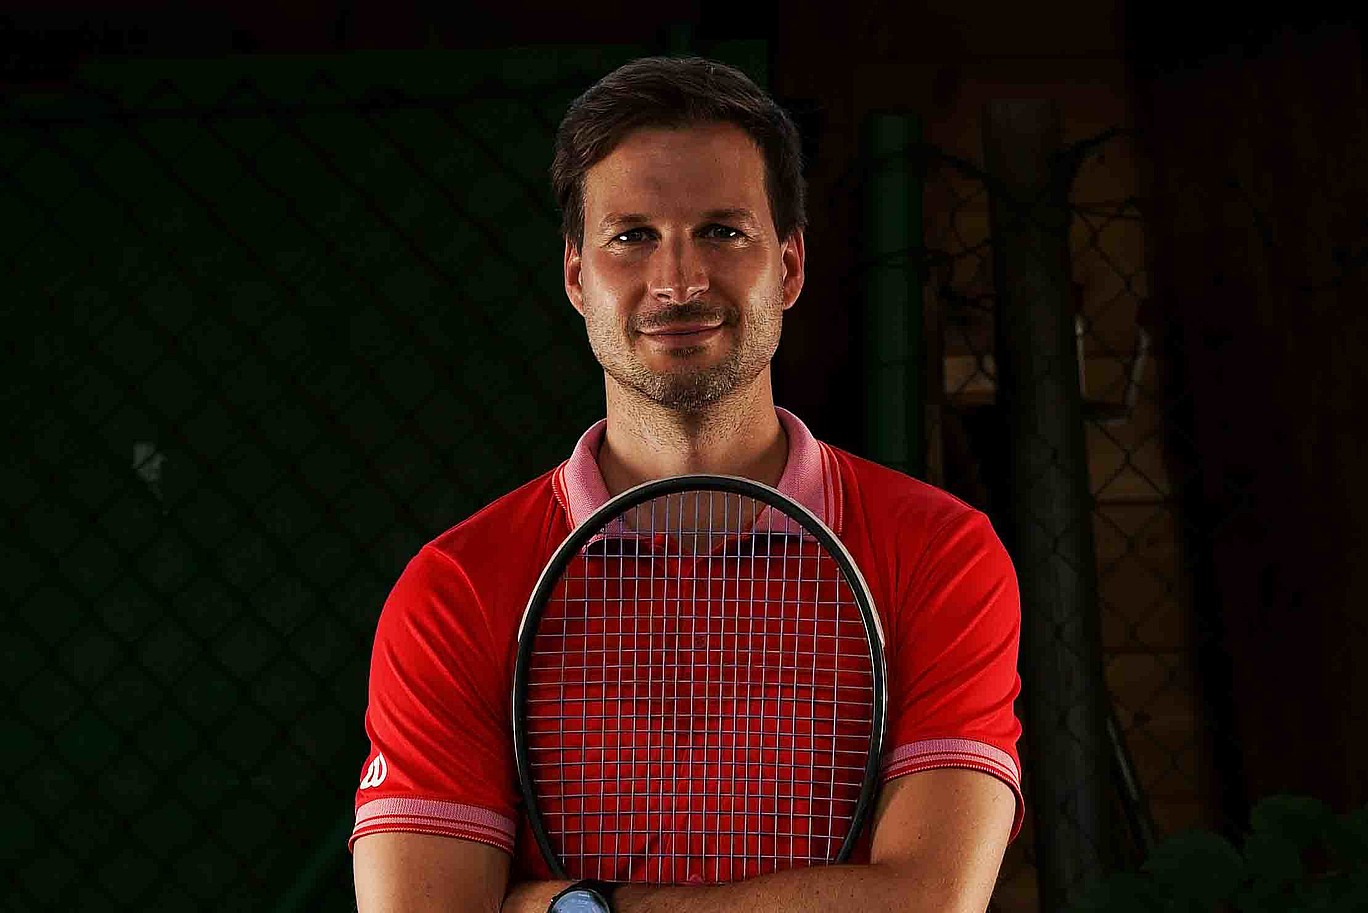 Portrait photo Jochen Seubert - young man with tennis racket